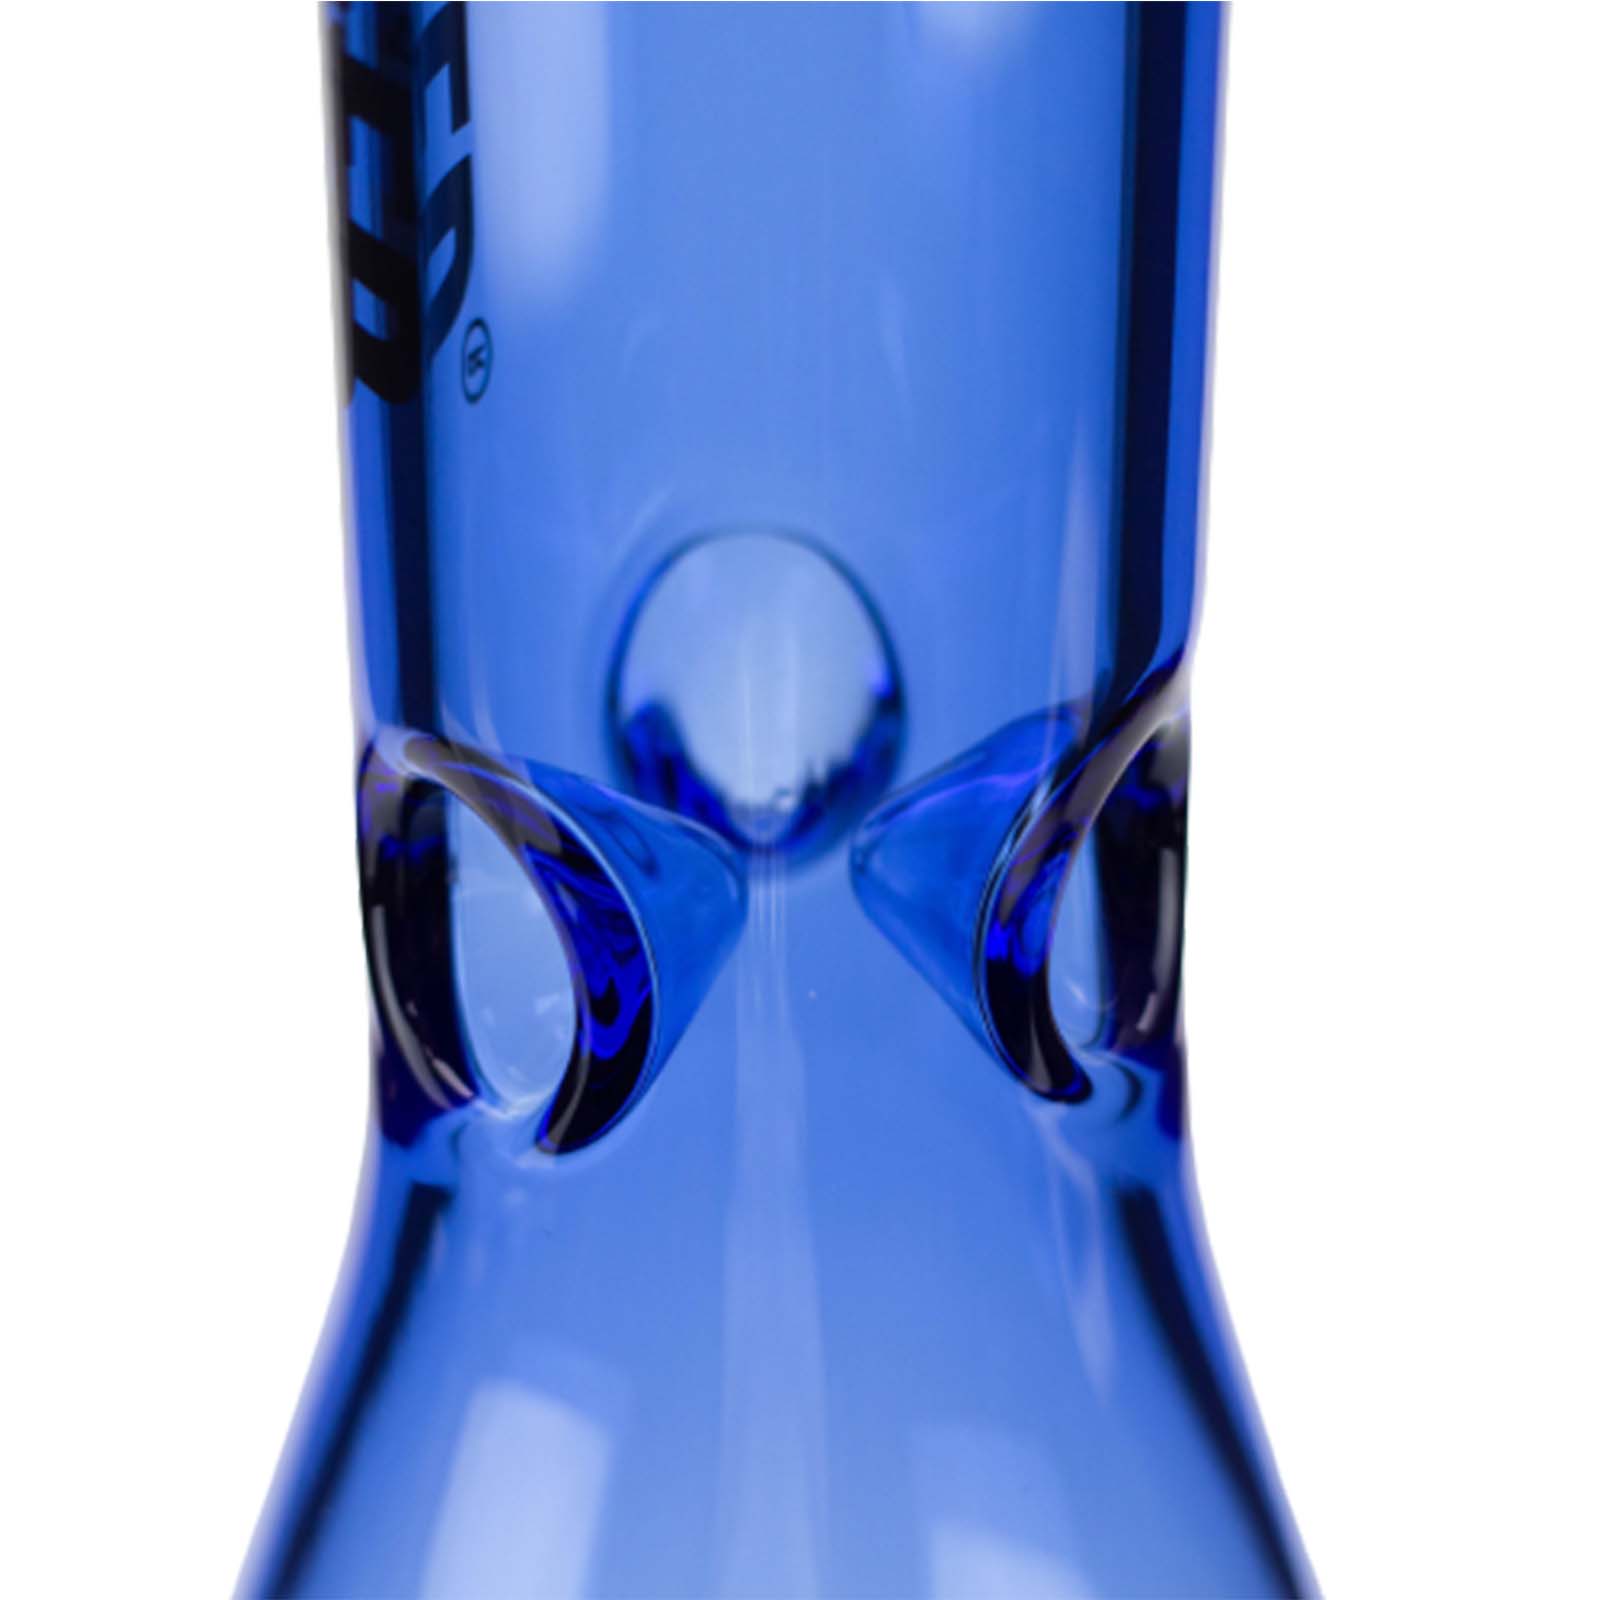 12-Inch Weneed Dark Matter Beaker Glass Bong